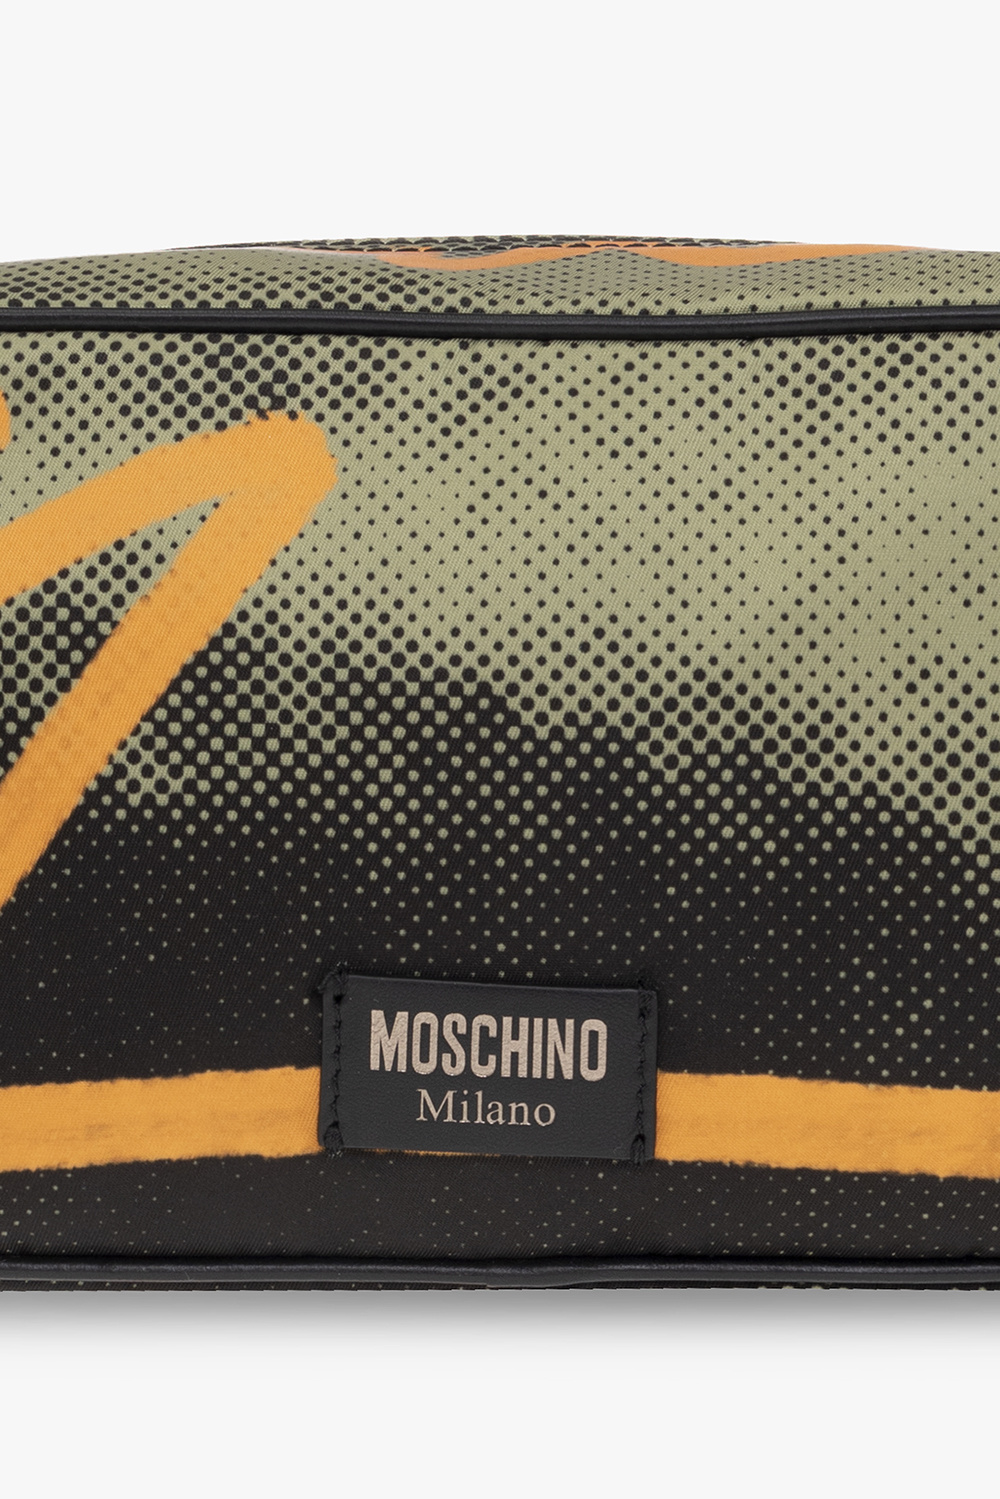 Moschino Stina Double Zip Camera Bag